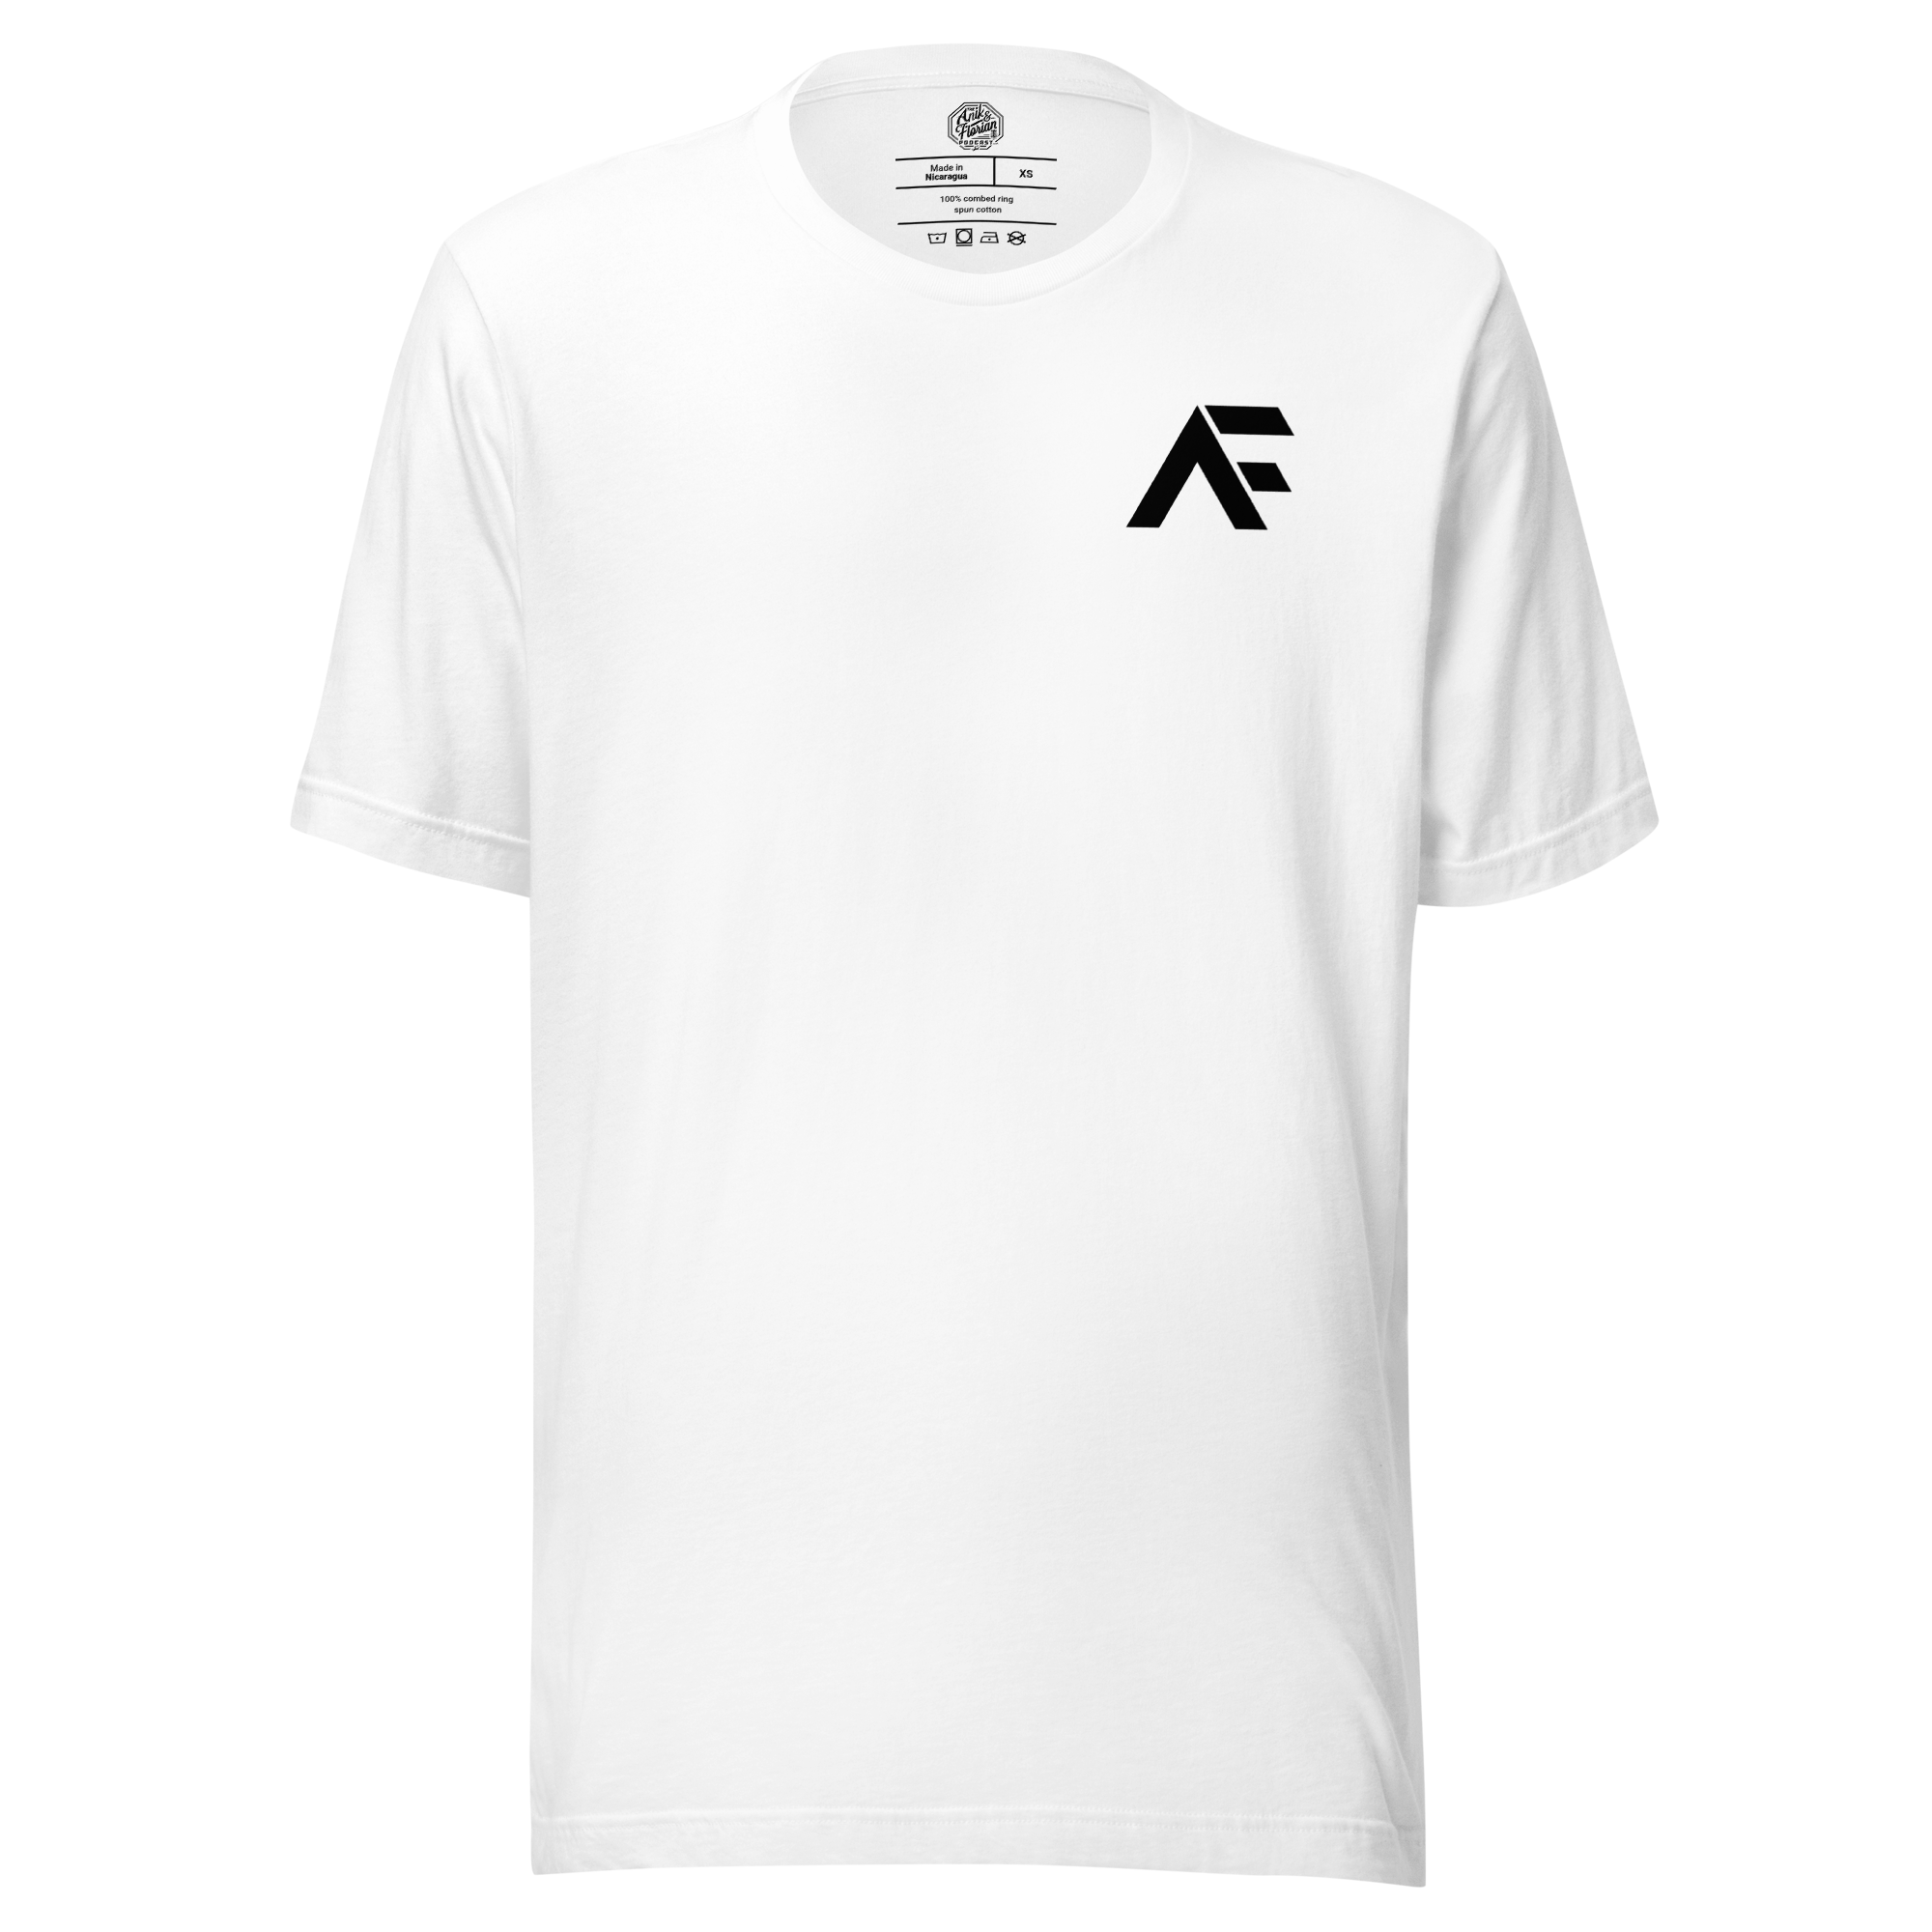 Jon Anik and Kenny Florian UFC Podcast Merch AF Monogram Logo Black Tshirt in White on Front for JonAnik.com